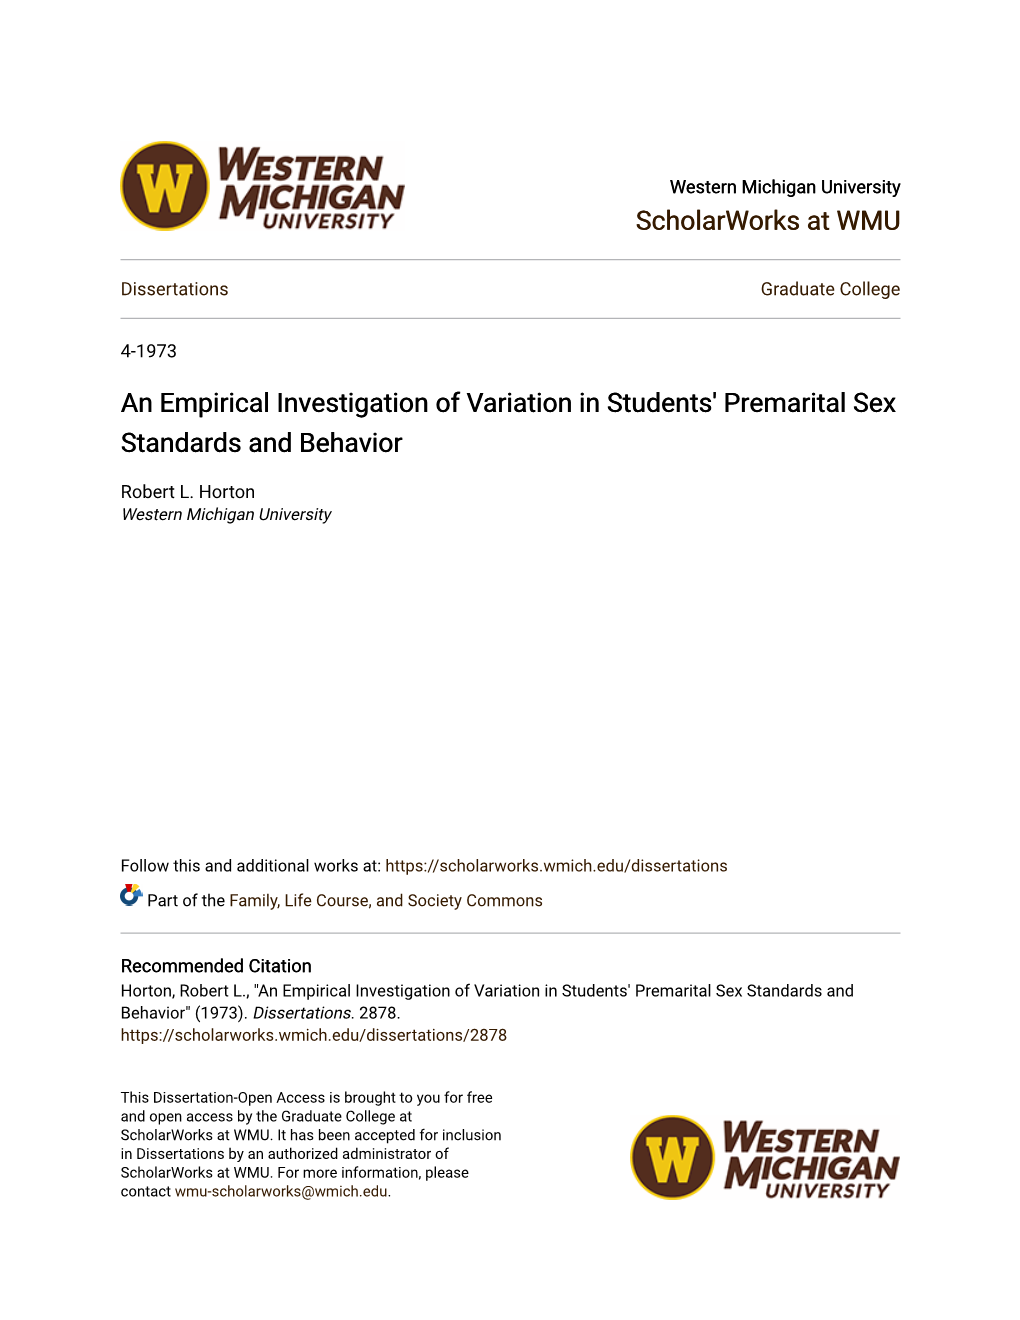 An Empirical Investigation of Variation in Students' Premarital Sex Standards and Behavior